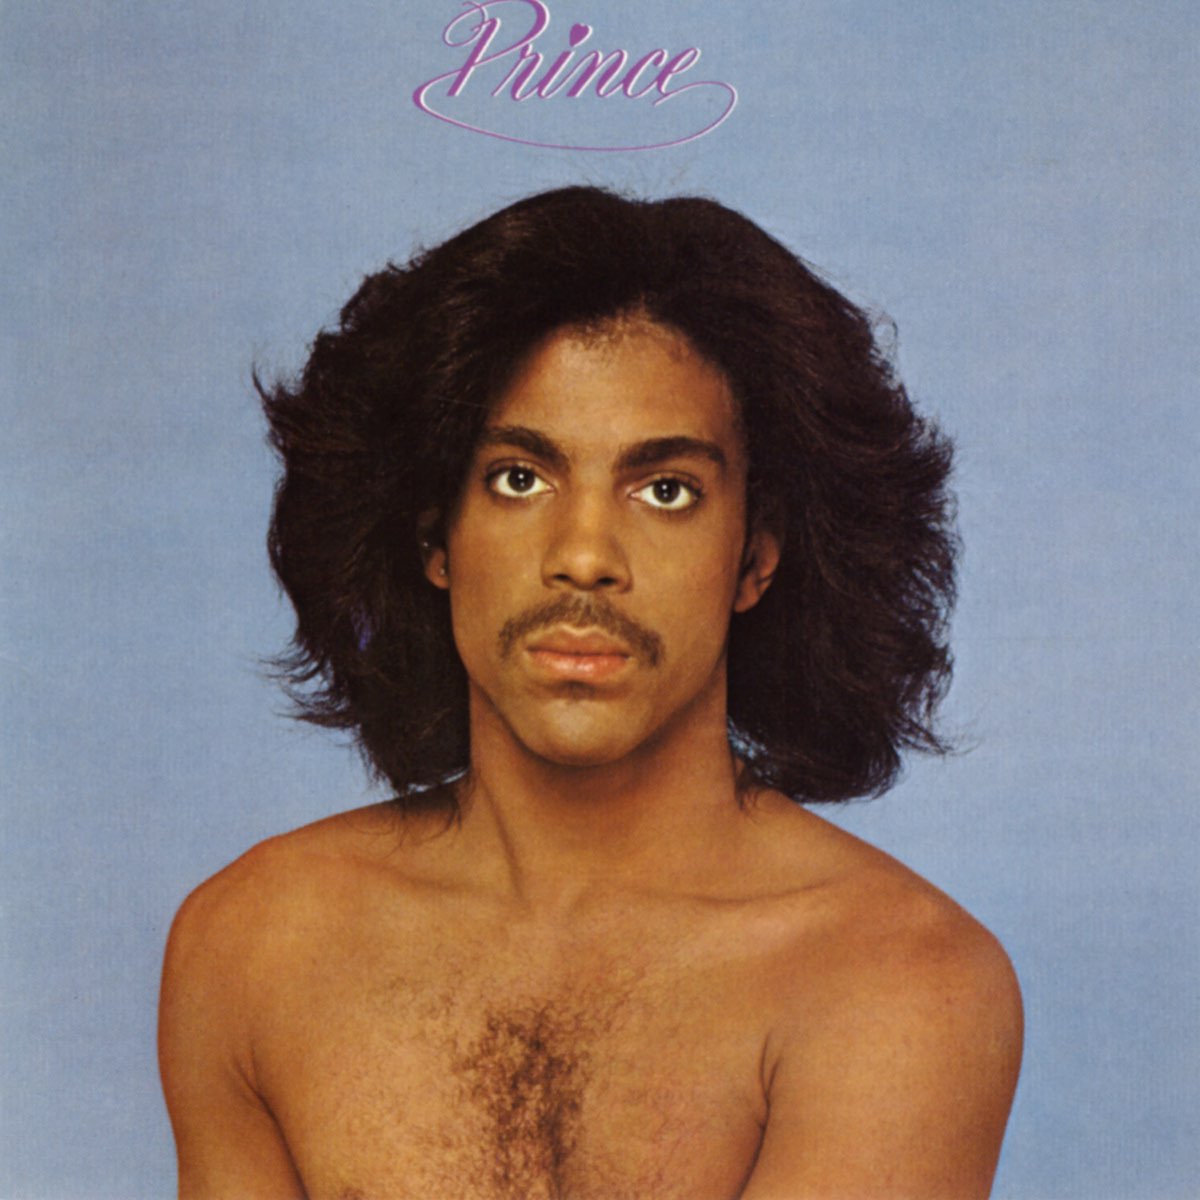 Prince — Bambi cover artwork